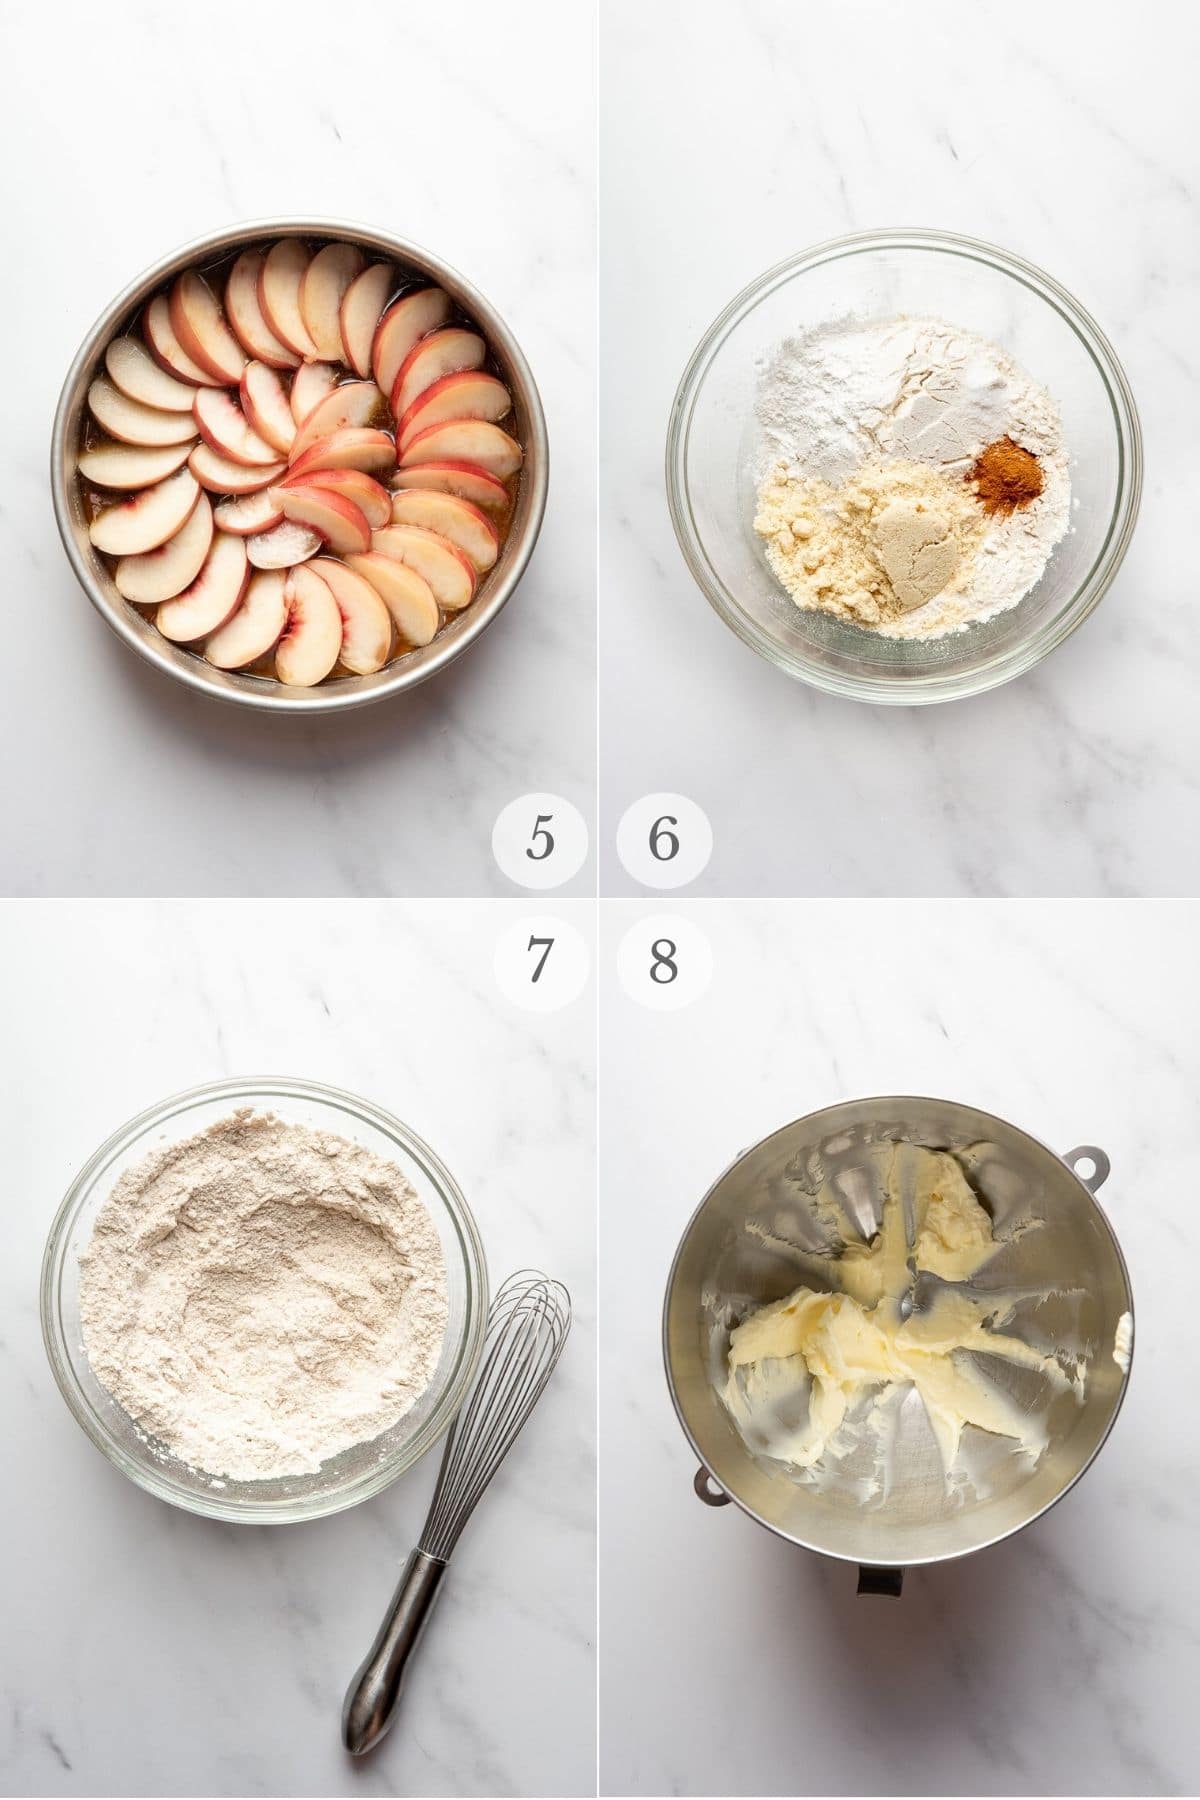 peach upside down cake recipe steps 5-8